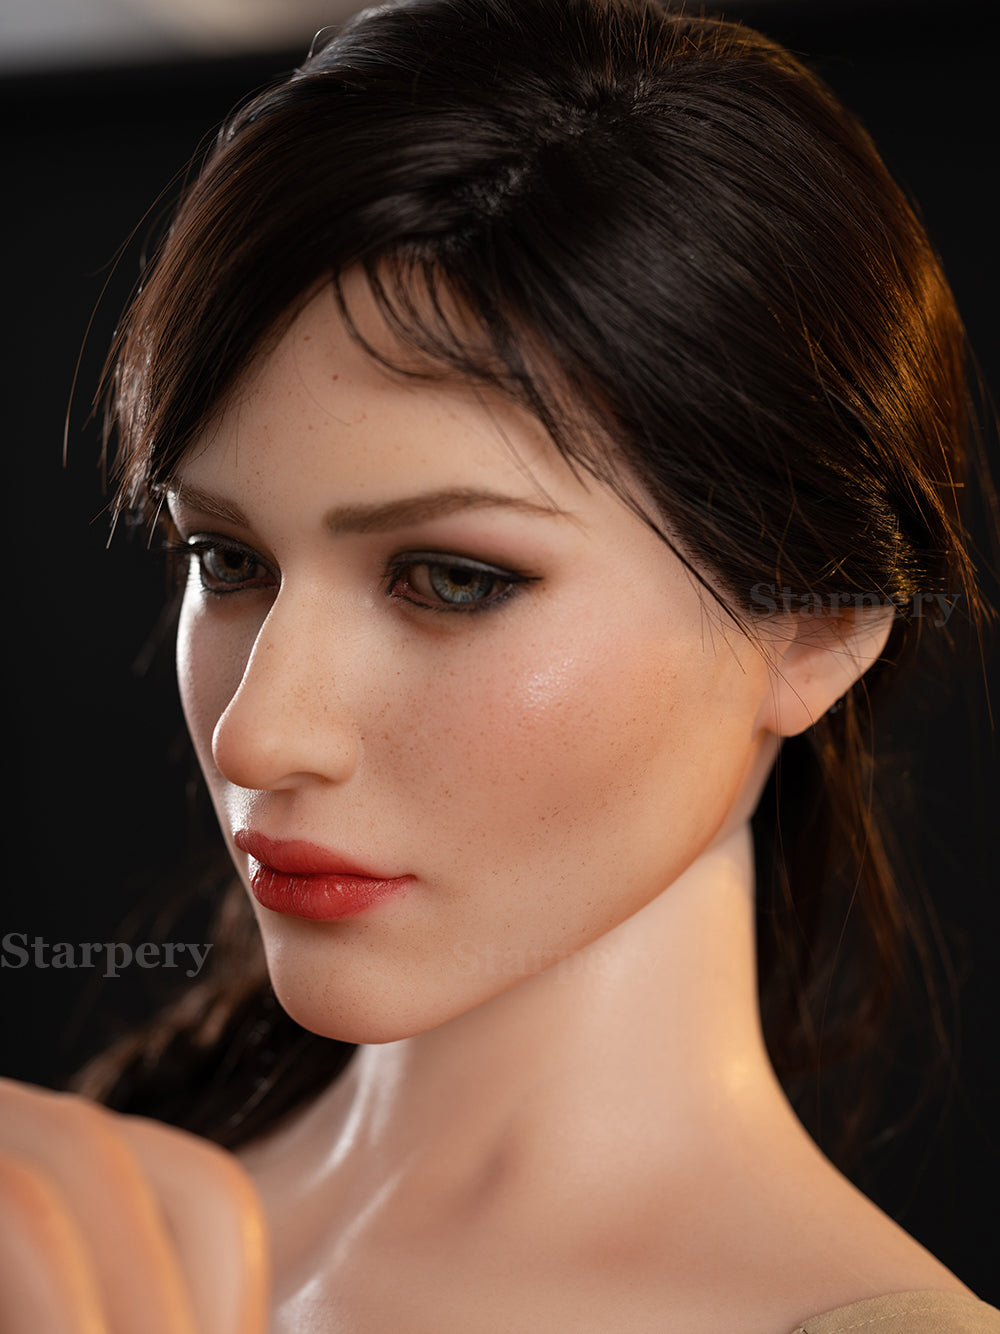 Starpery 167 cm E - Eugenia | Buy Sex Dolls at DOLLS ACTUALLY